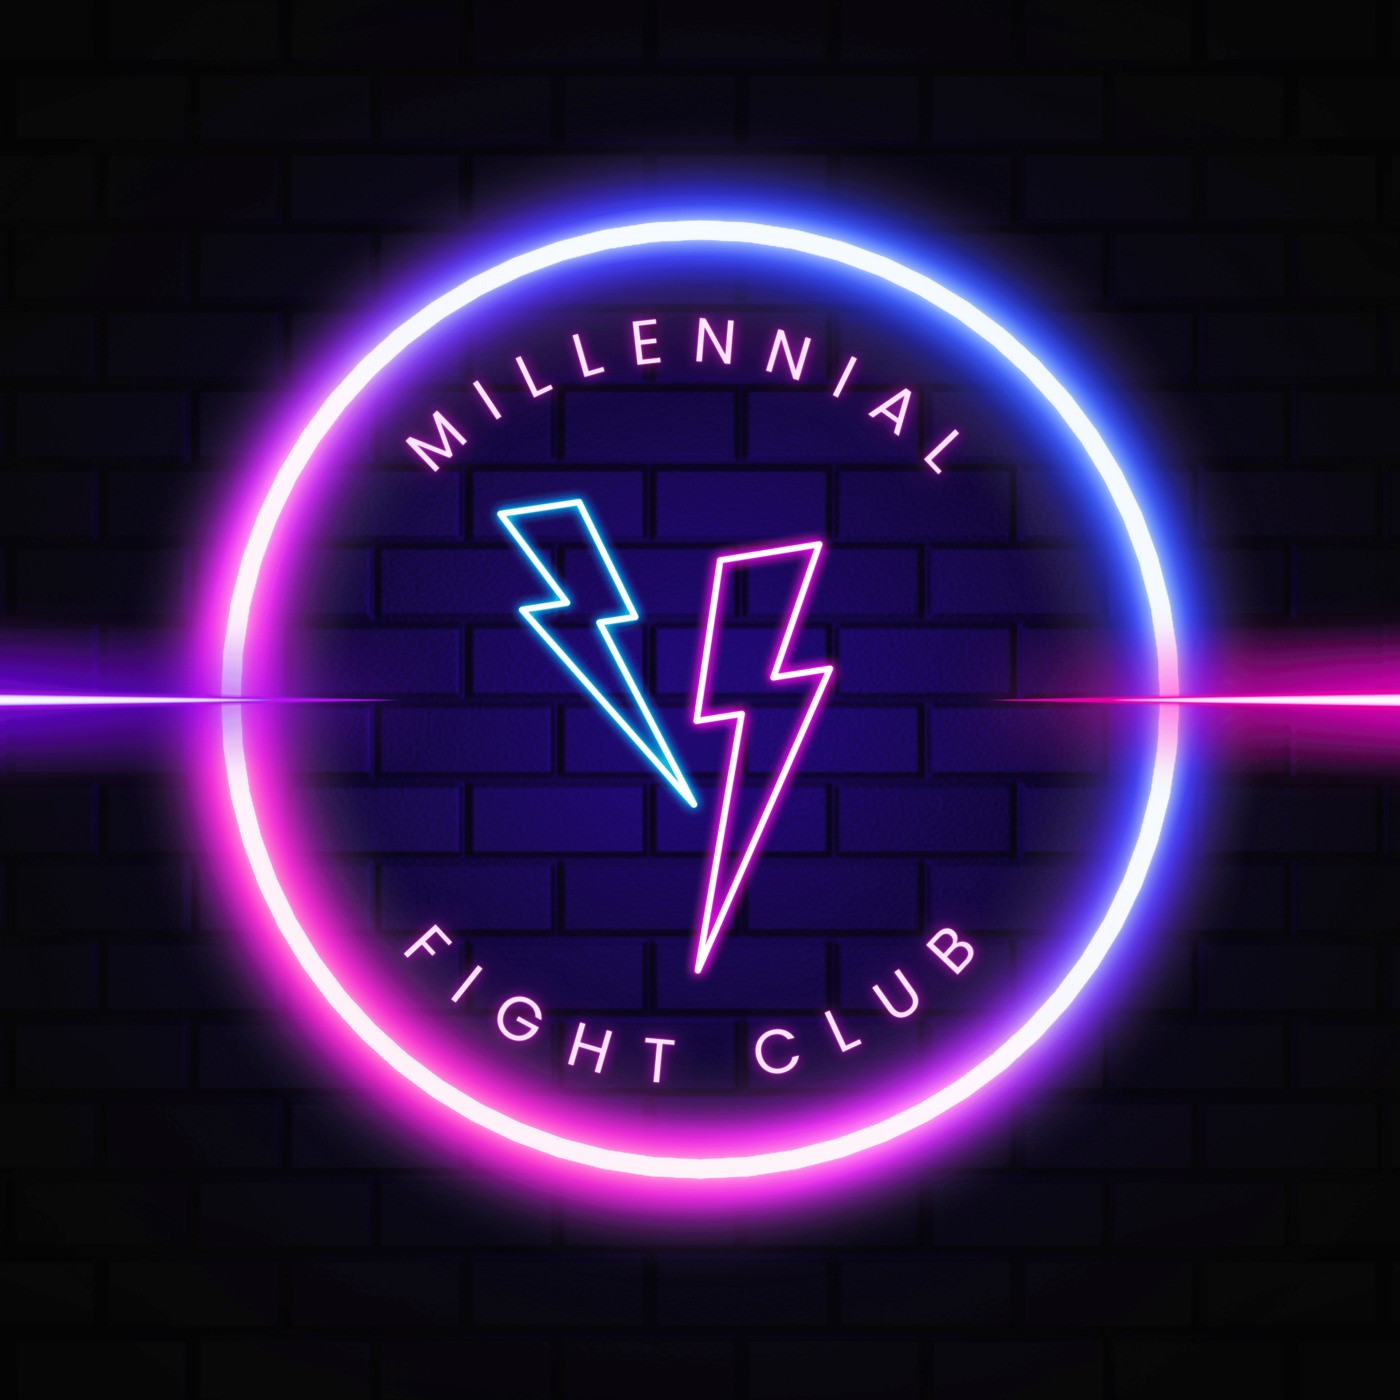 Millennial Fight Club